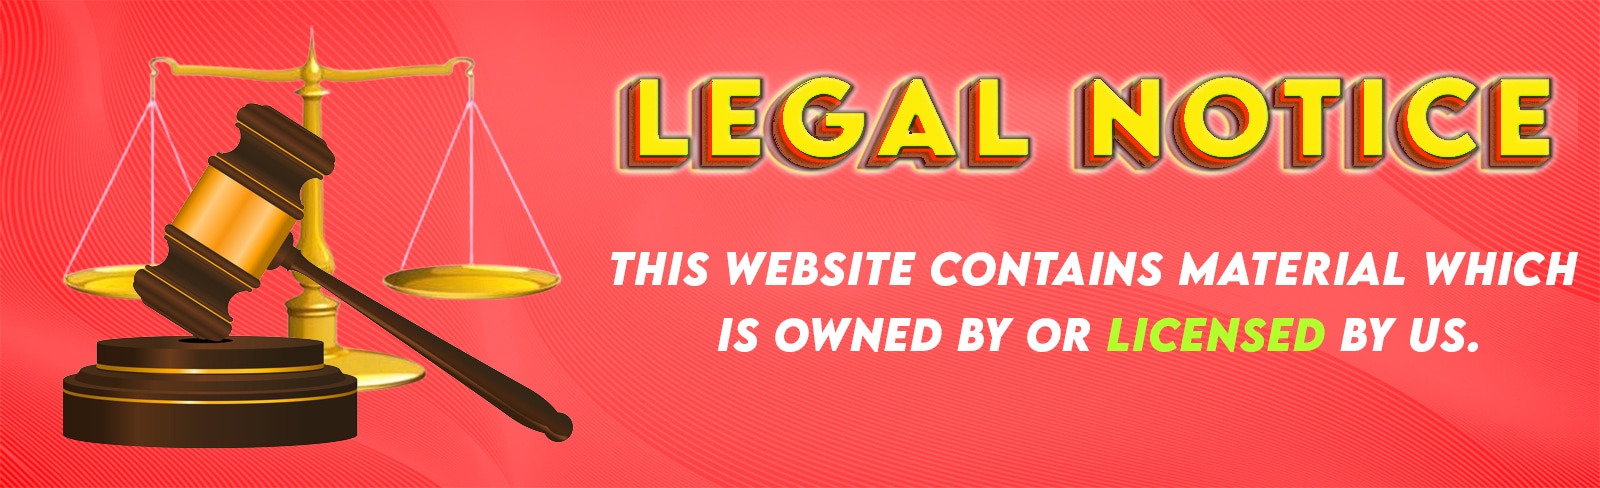 Legal Notice Desktop Banner